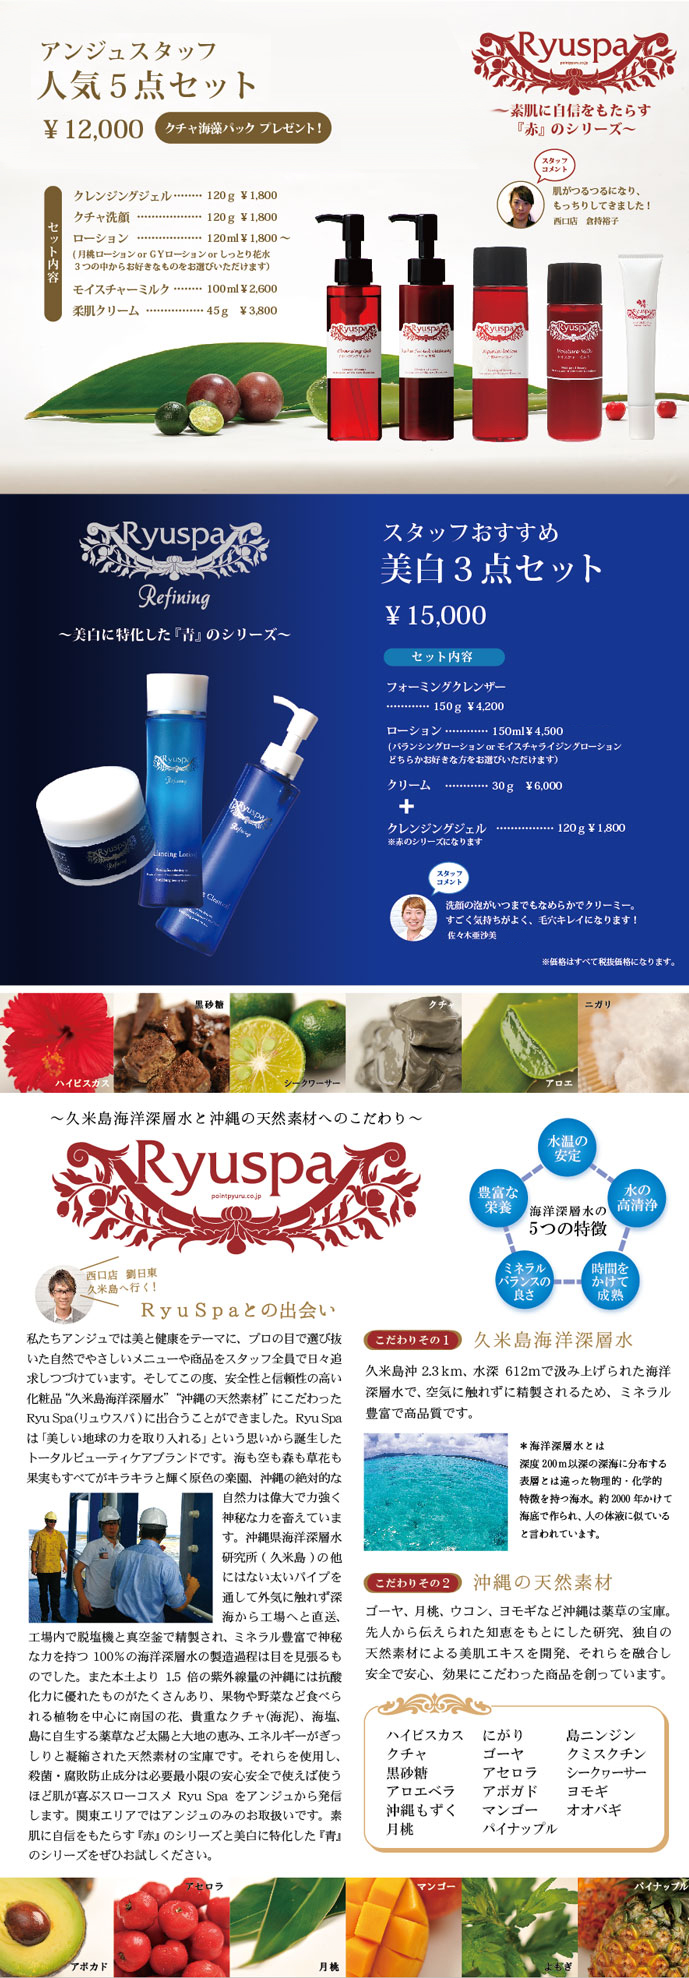 RyuSpaデビュー記念キャンペーン